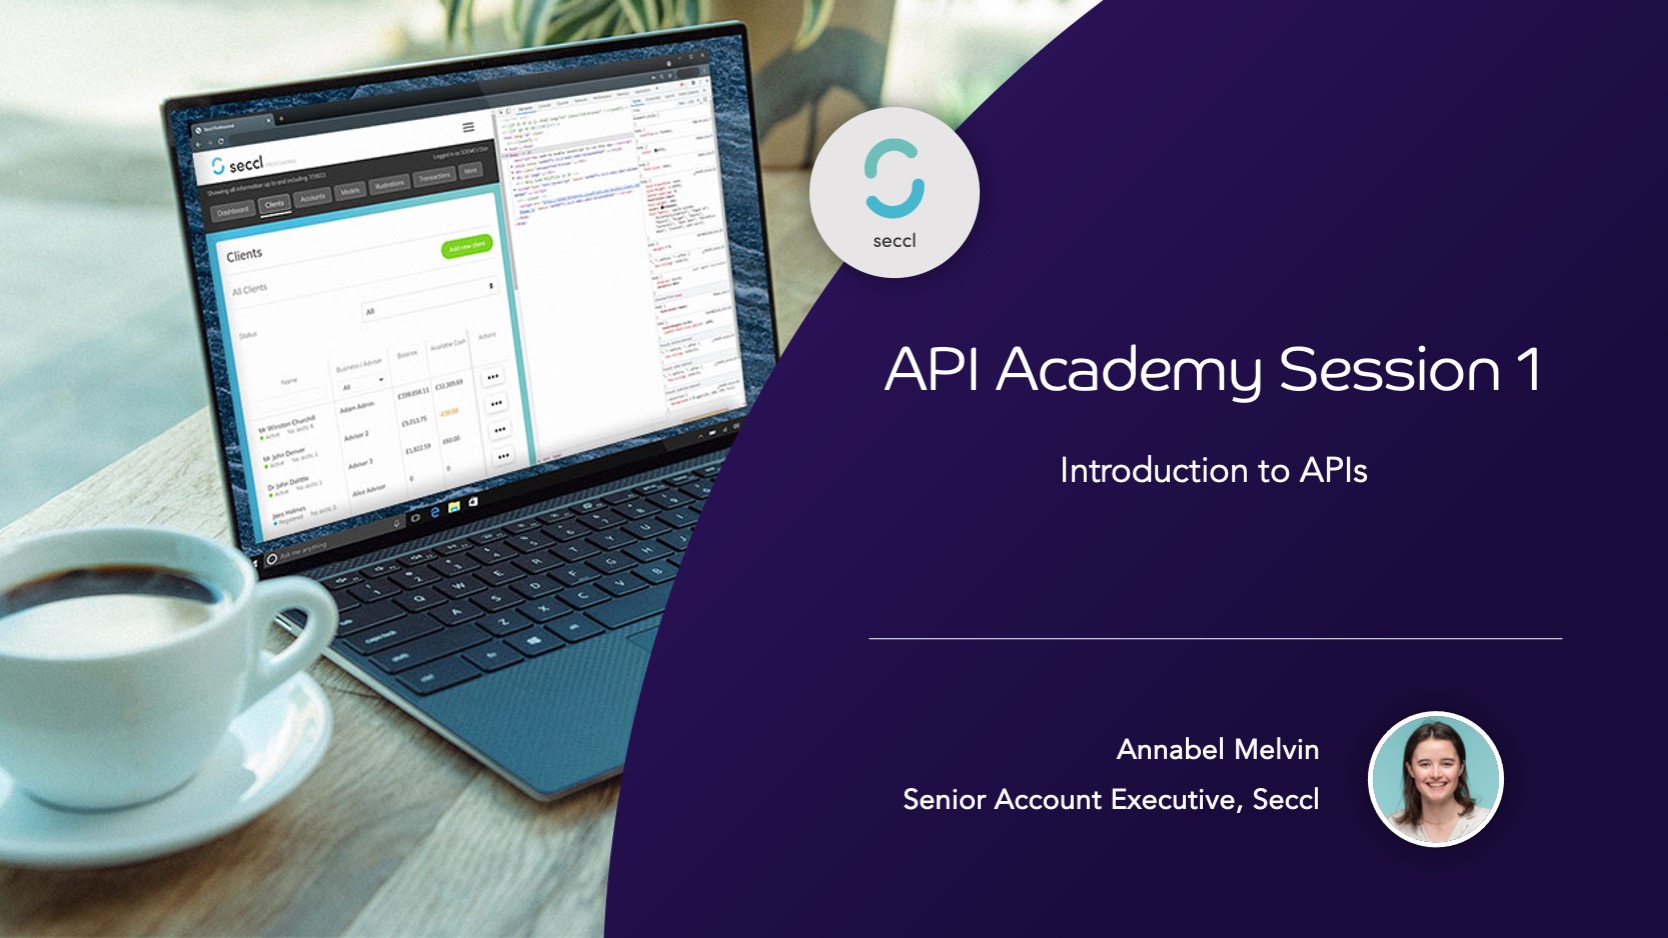 1. An introduction to APIs